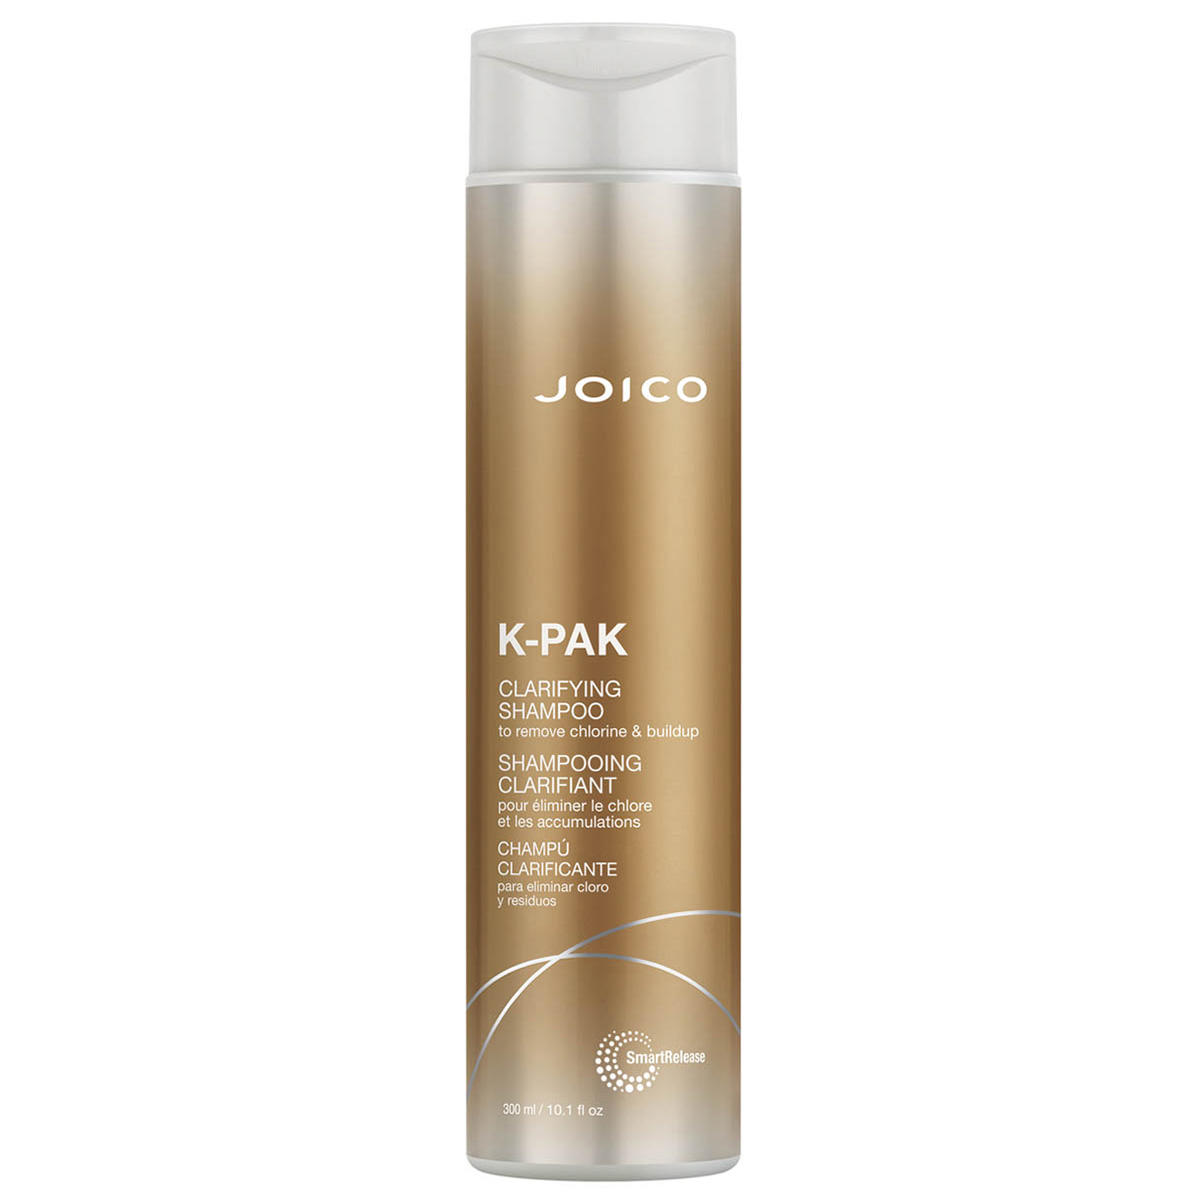 JOICO K-PAK Clarifying Shampoo 300 ml - 1